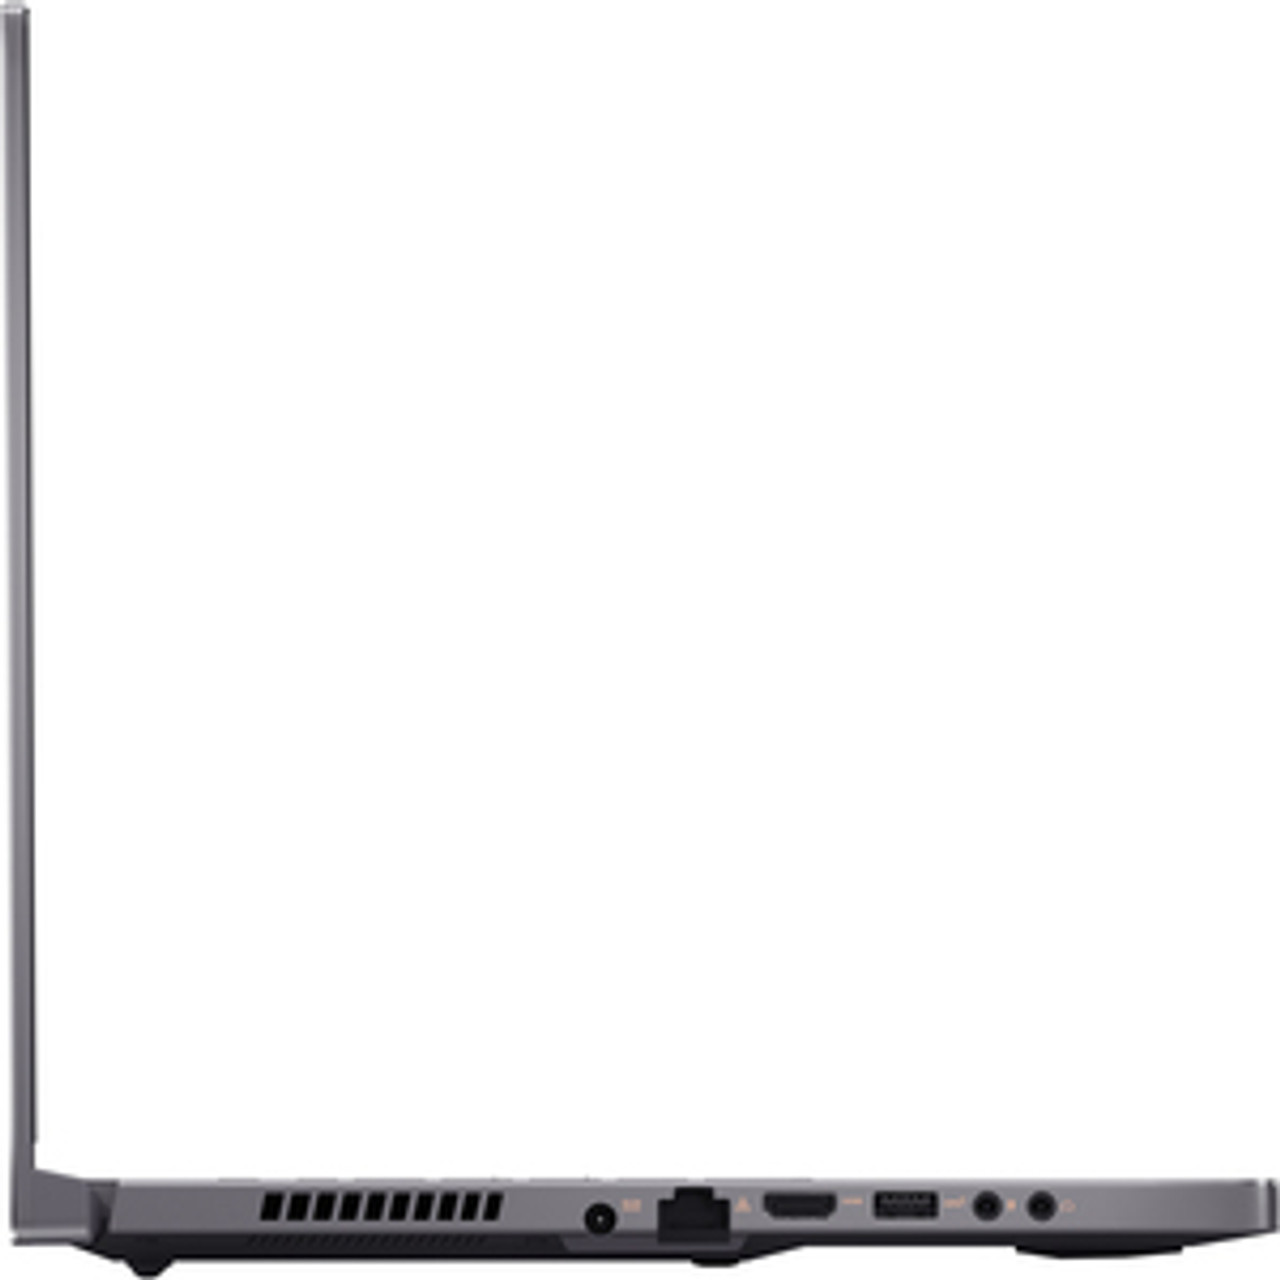 Asus ProArt StudioBook Pro 15 W500 W500G5T-XS77 15.6" Mobile Workstation